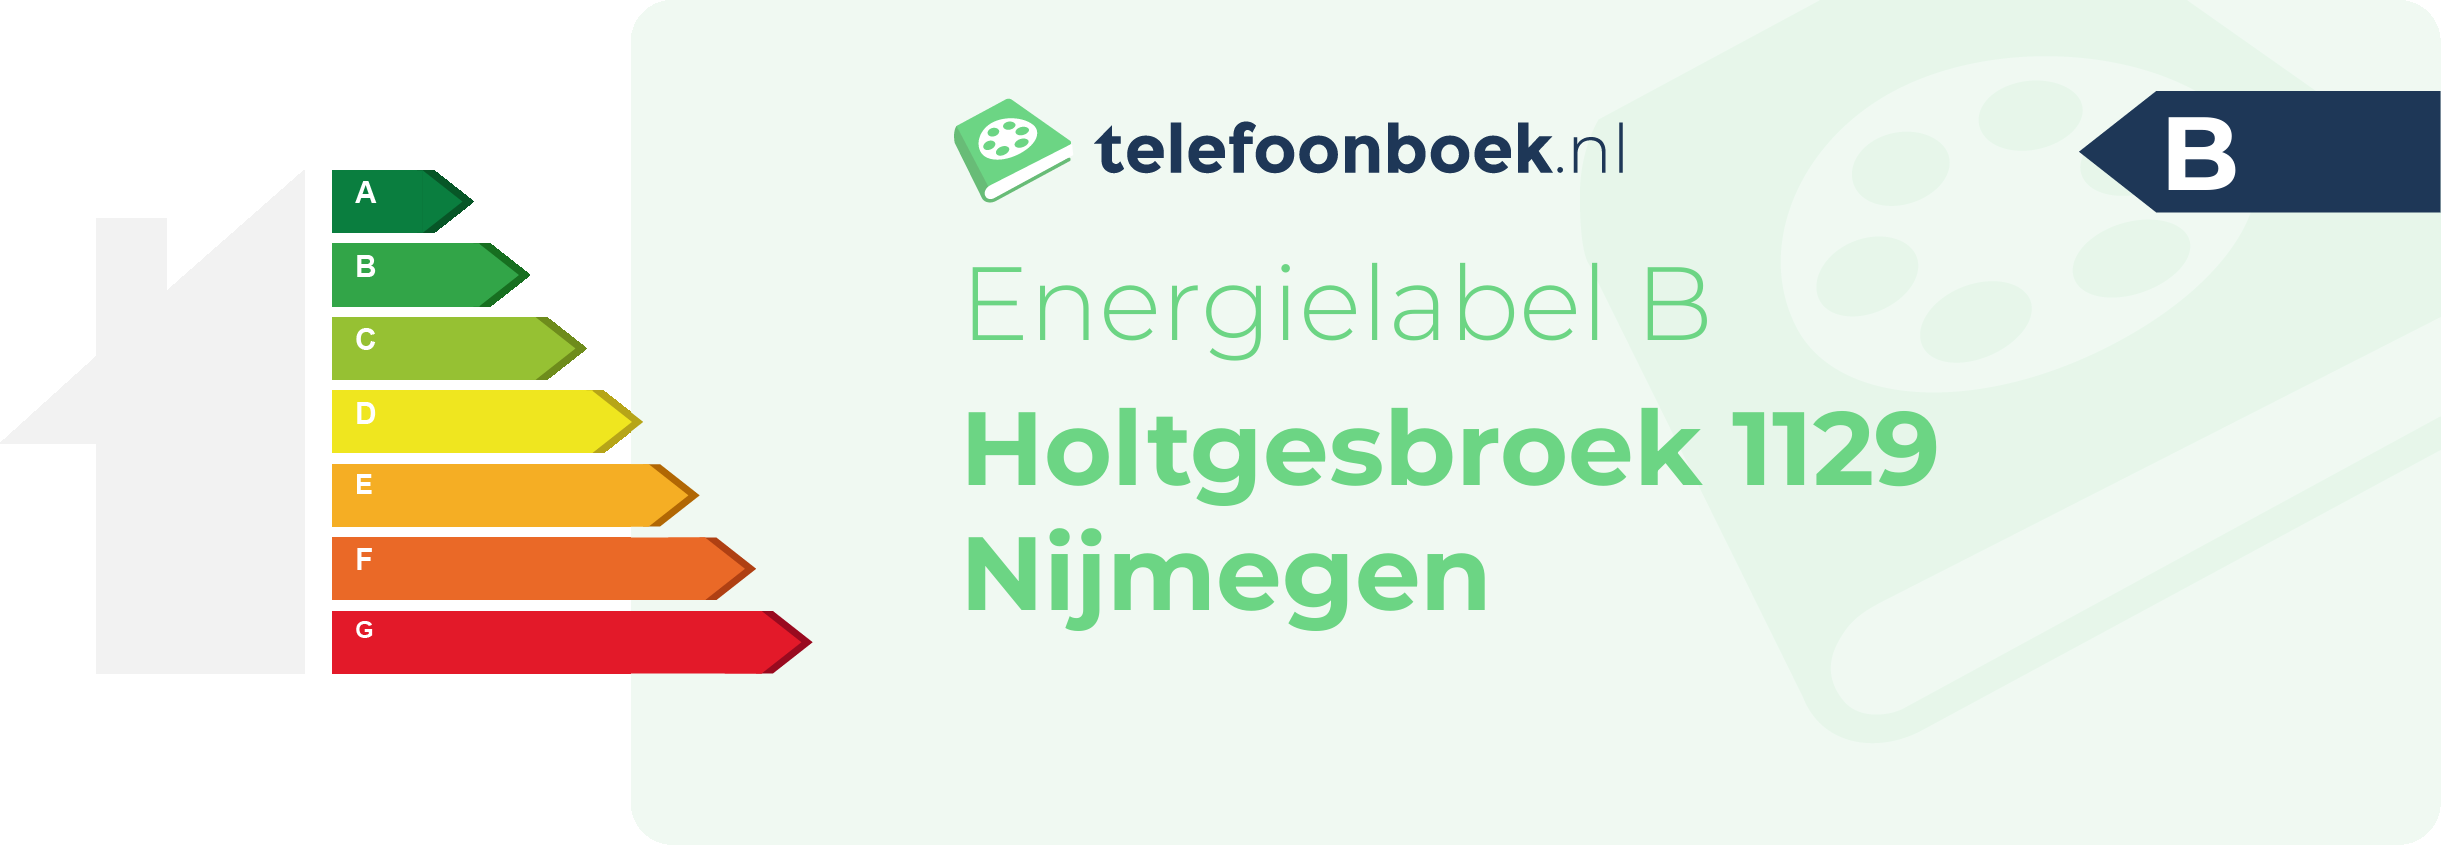 Energielabel Holtgesbroek 1129 Nijmegen